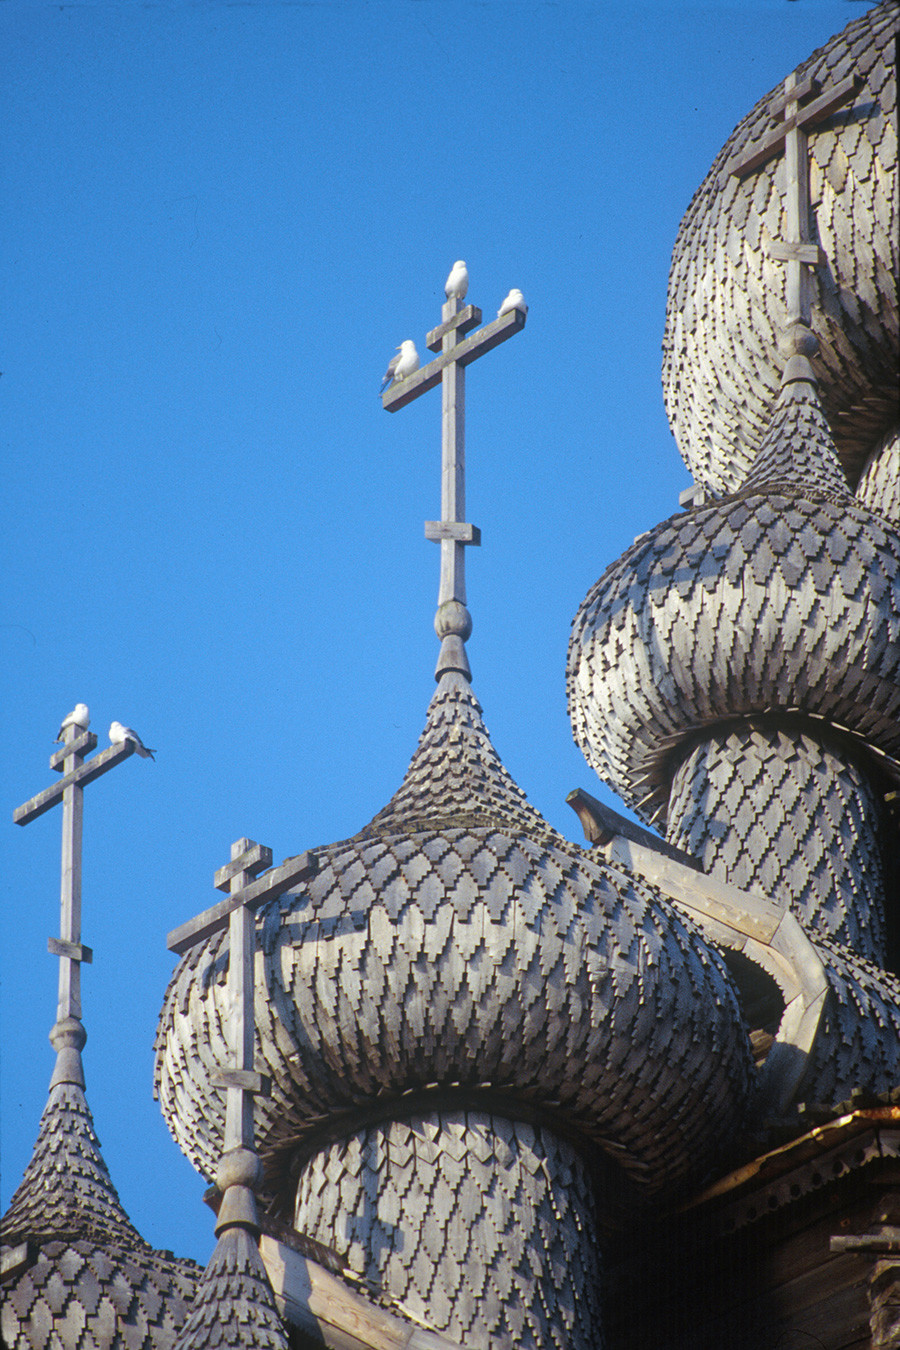 Iglesia de la Transfiguración. Fachada oeste, cúpulas con tejas de álamo. 6 de agosto de 1991